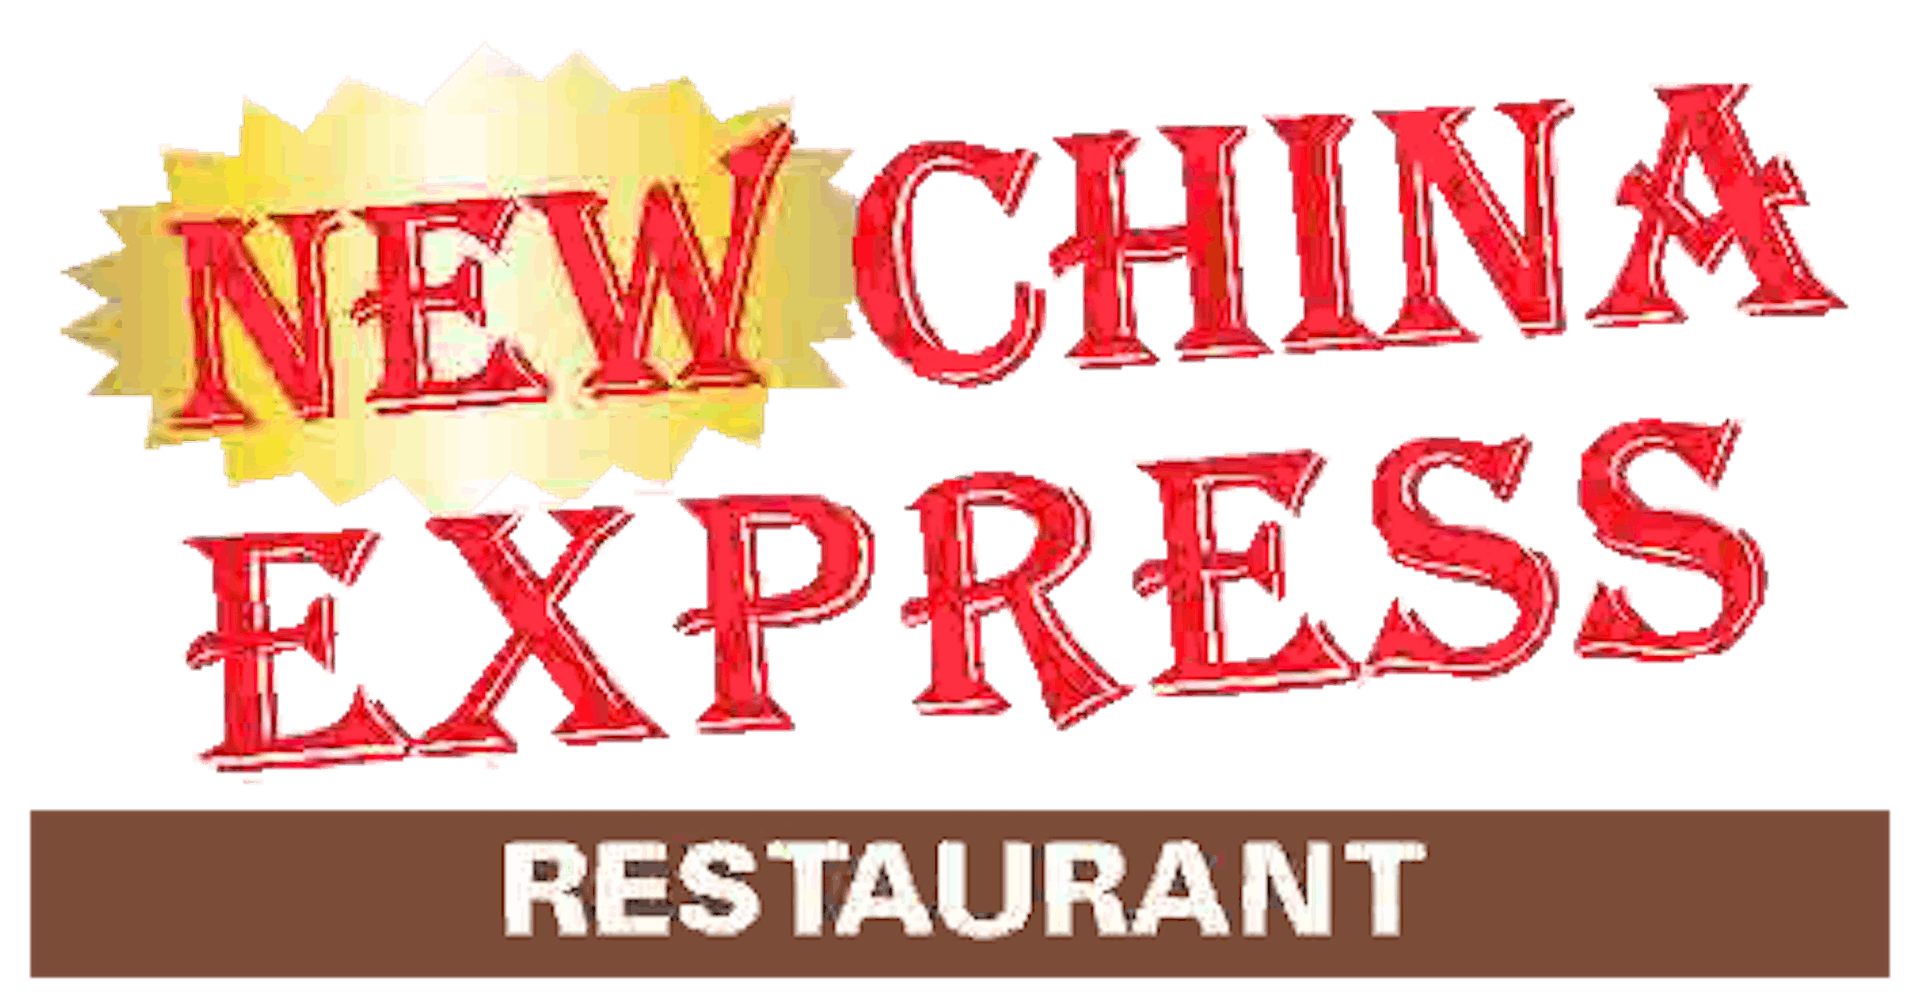 New China Express